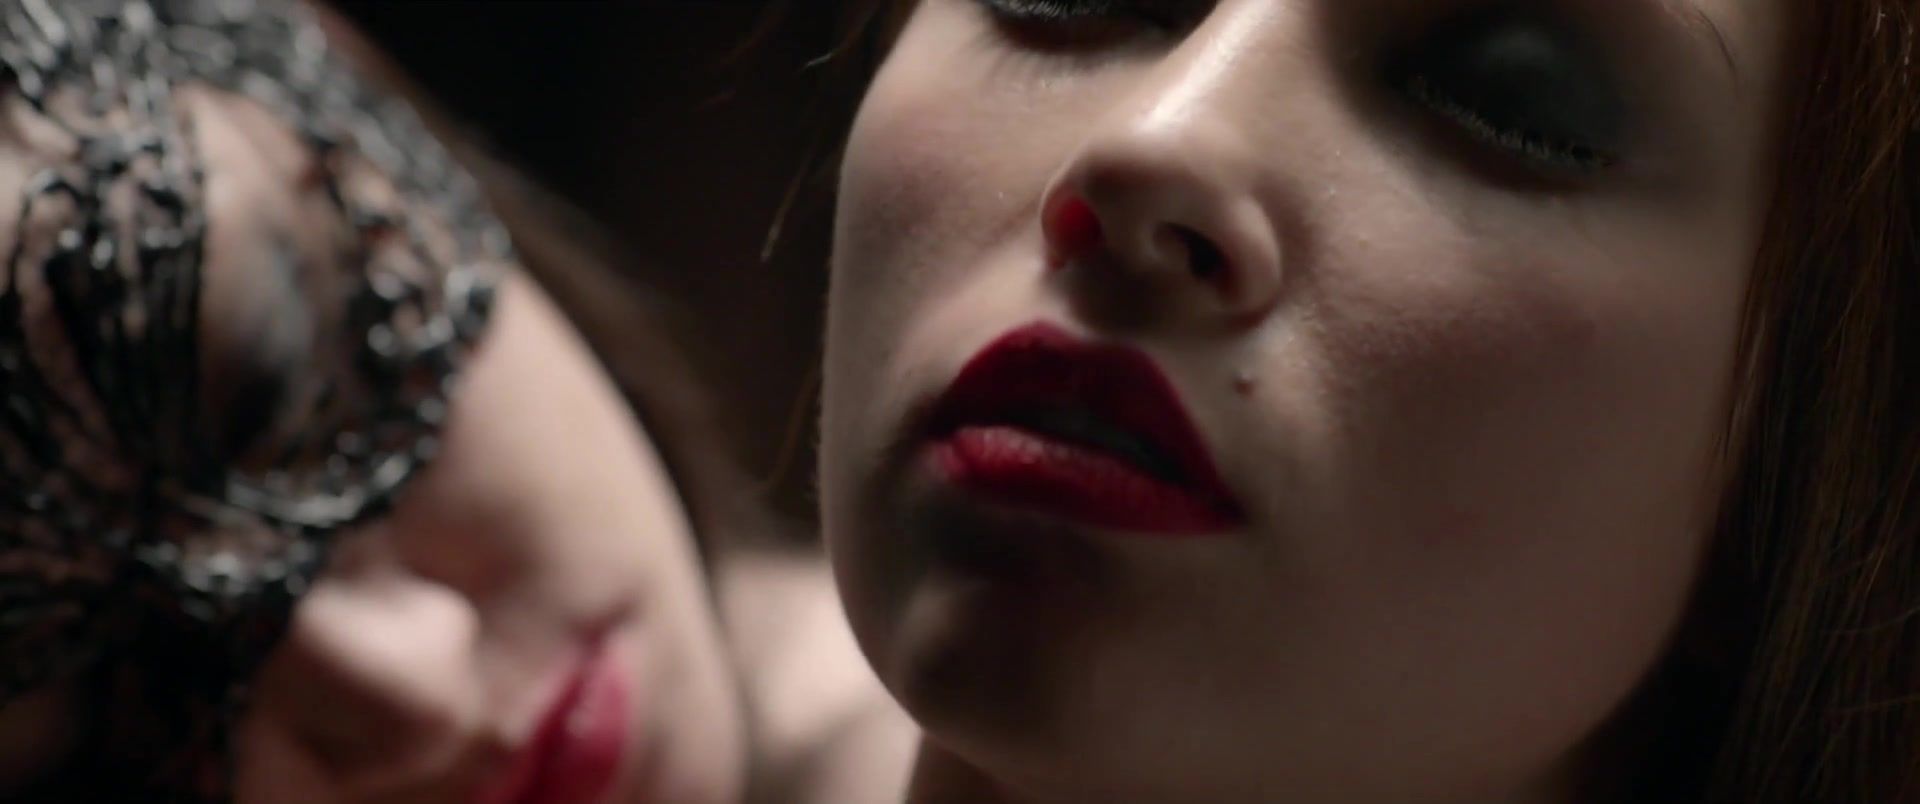 Sensual Hipersomnia - Beauty Hot Lesbian Short VIdeo Bus